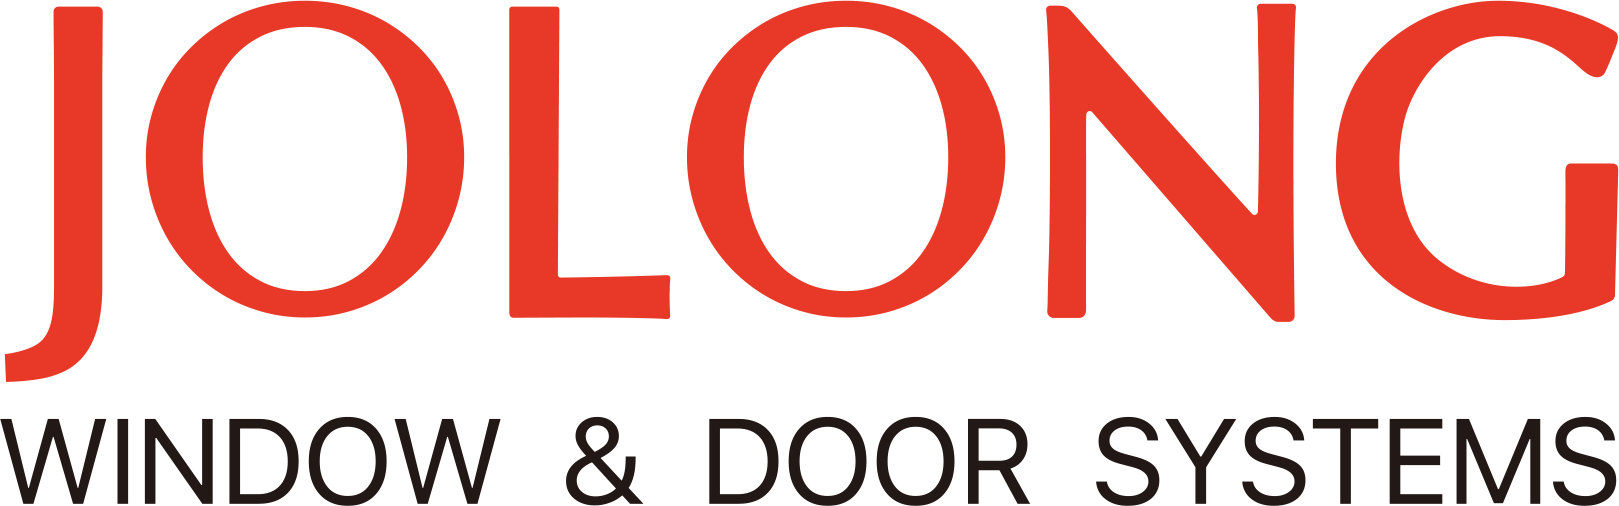 Jolong logo